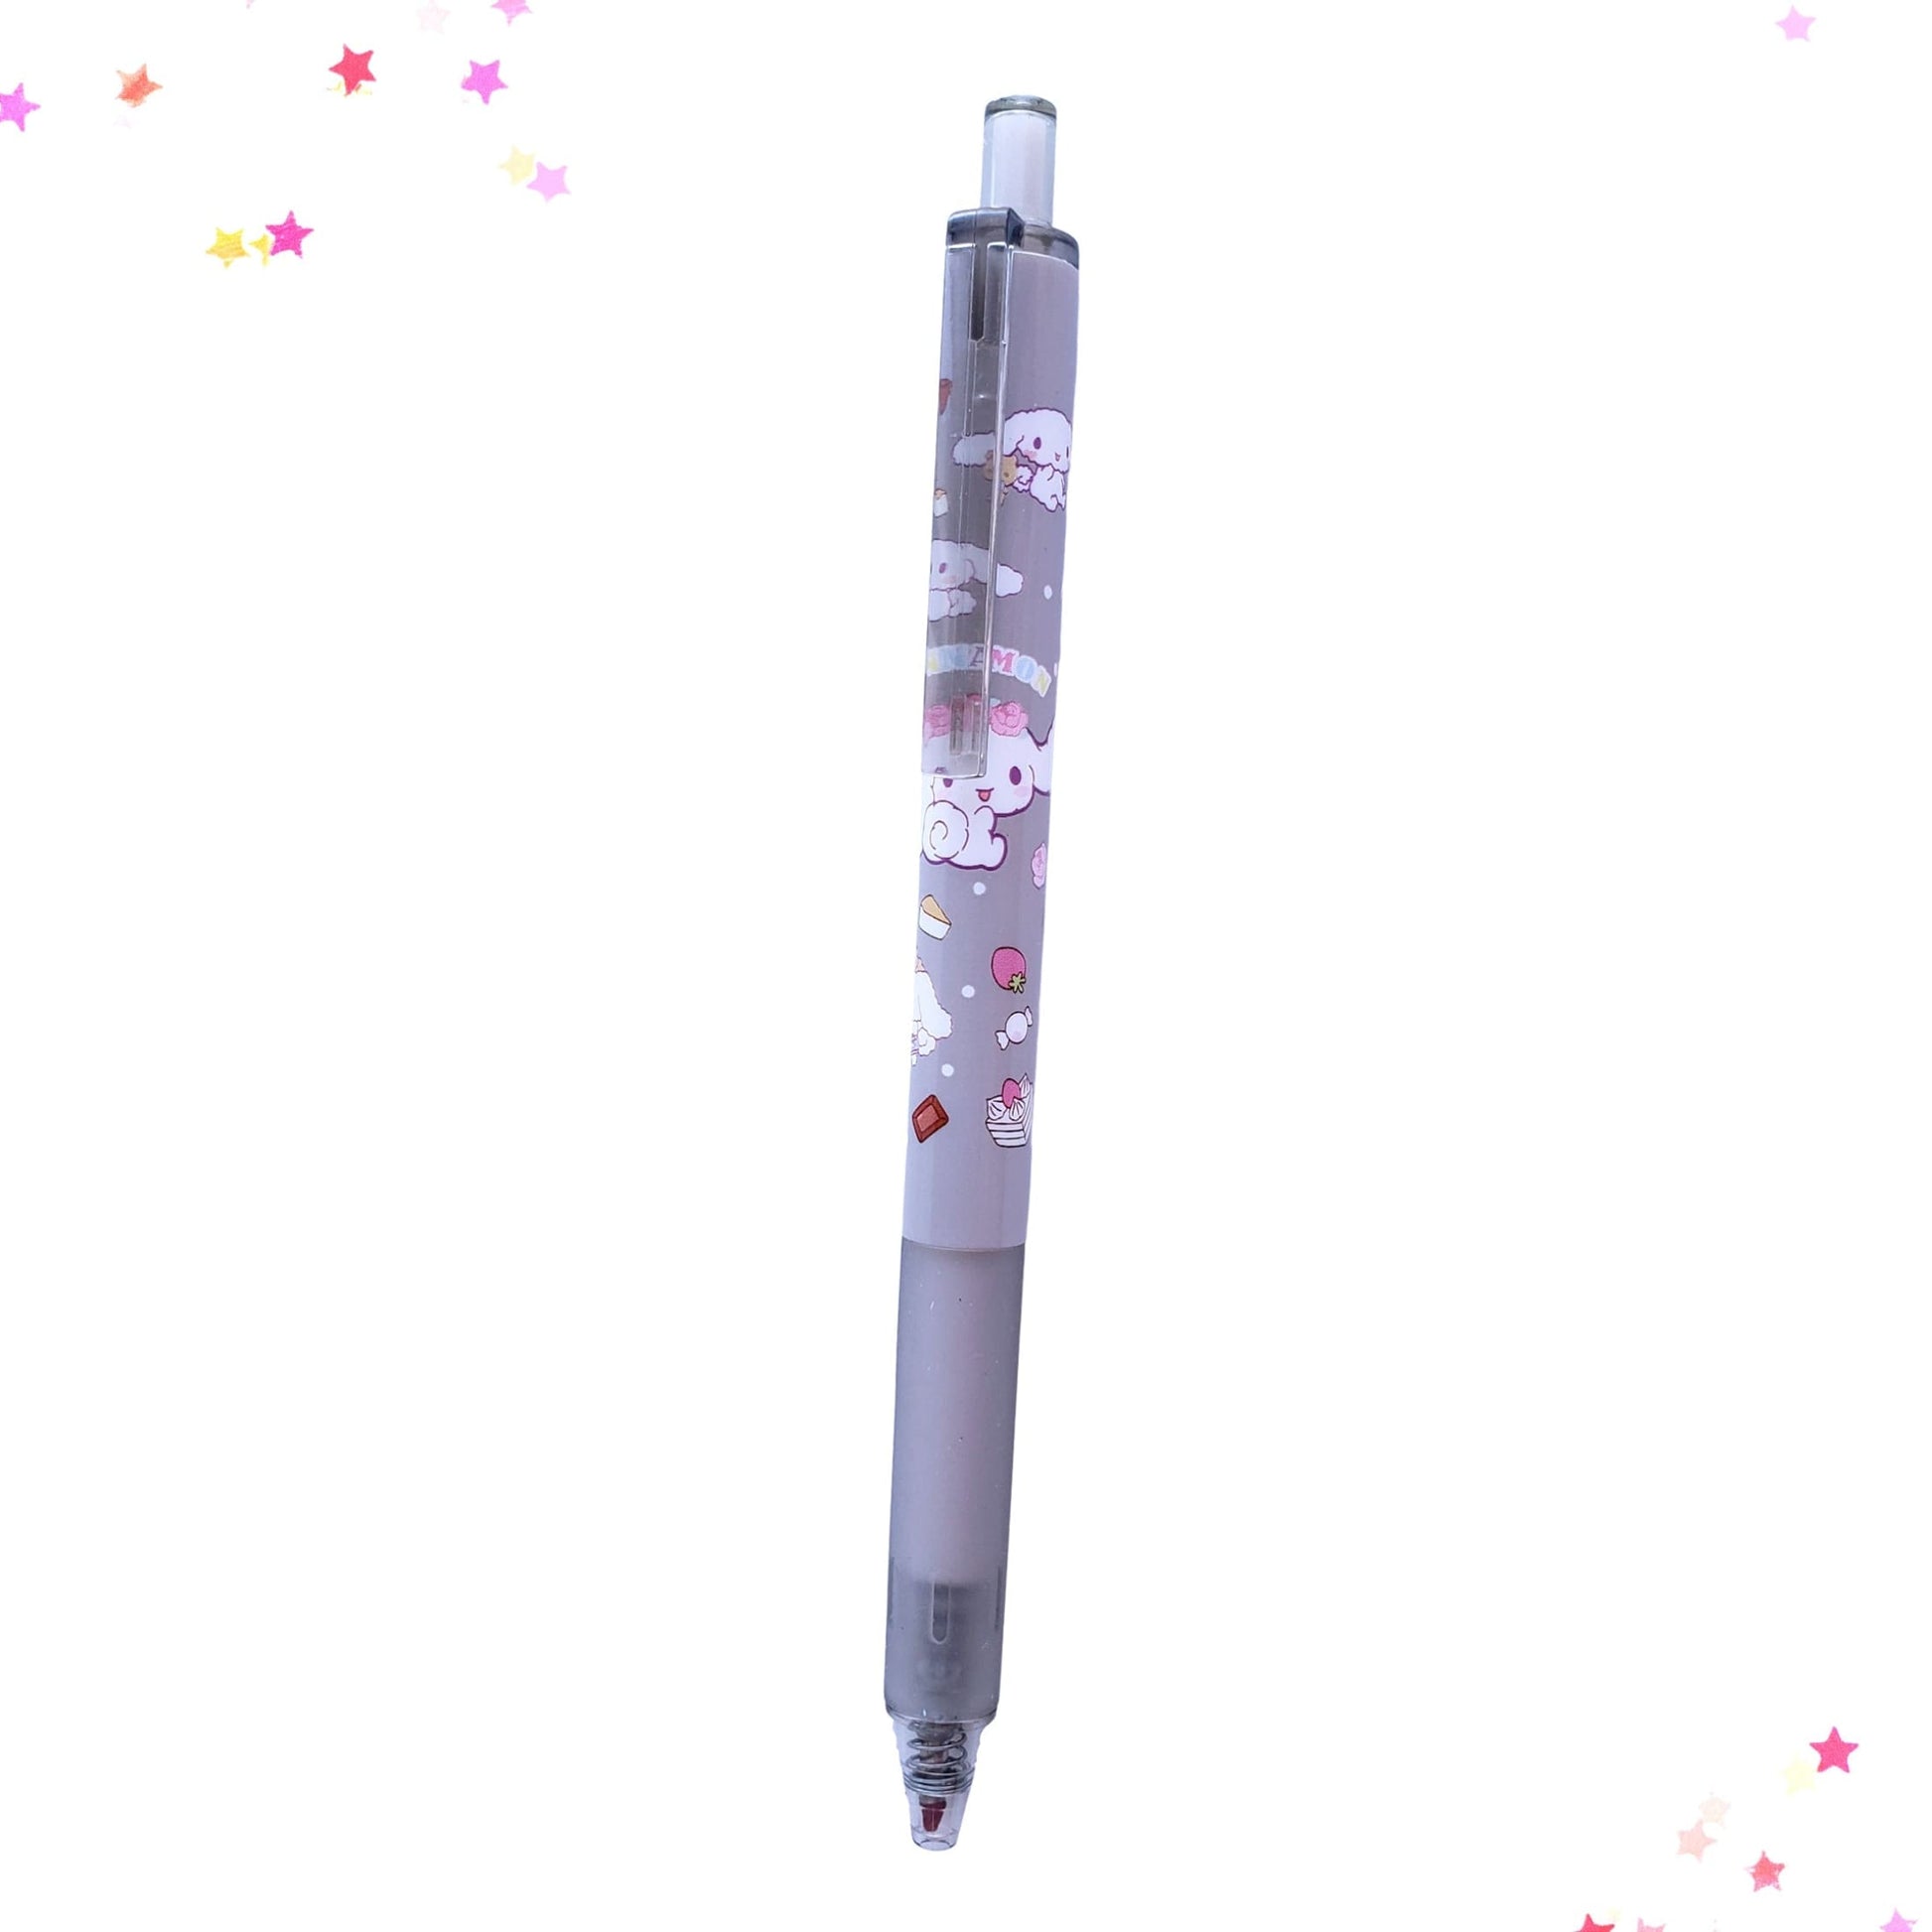 Stationery Pen, Purple Confetti Clickable Pen, Black Ink